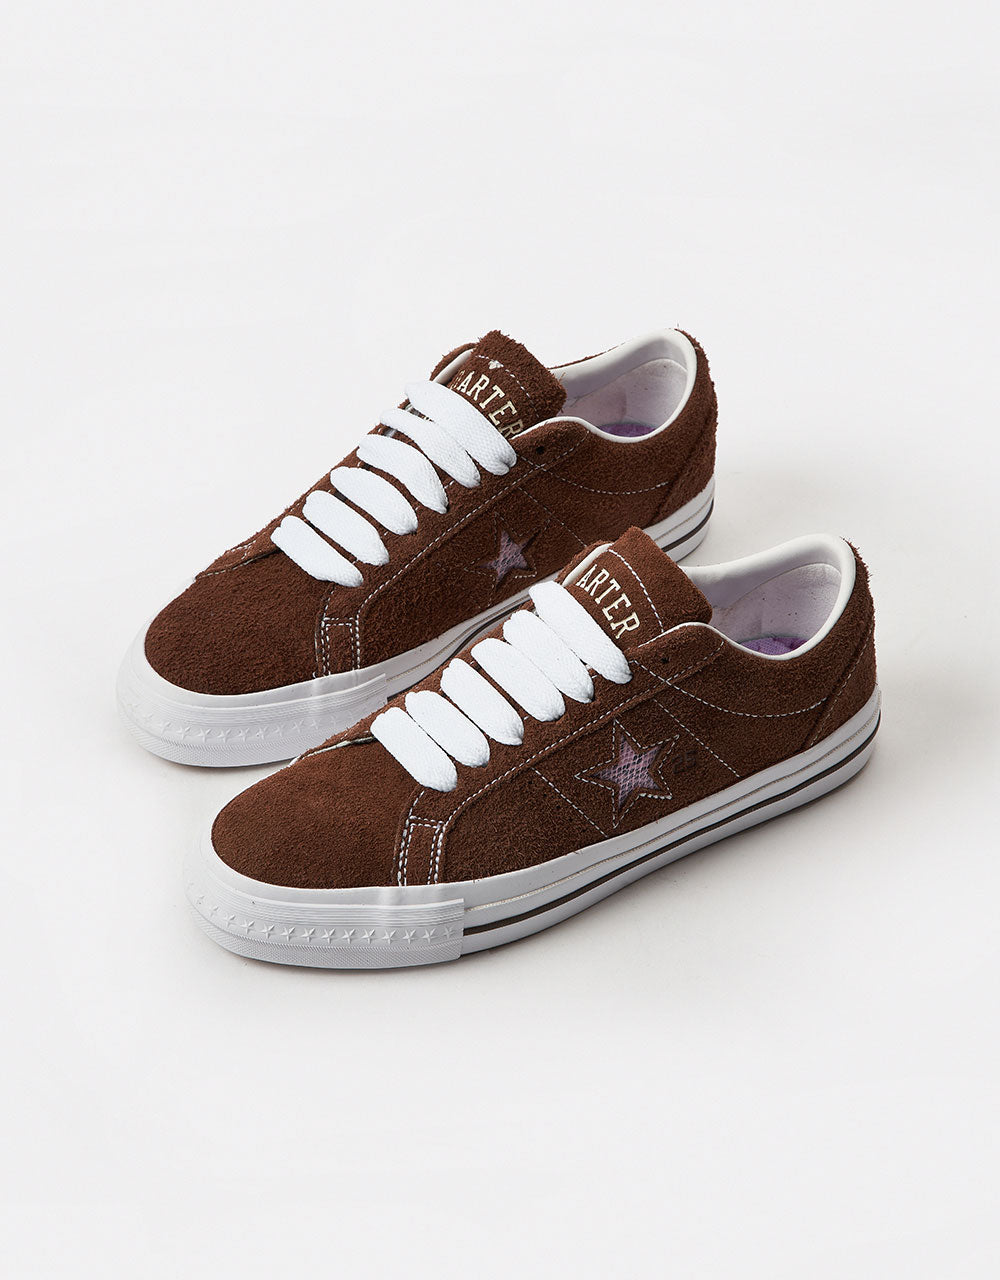 Converse x Quartersnacks One Star Ox Skate Shoes - Brown/White